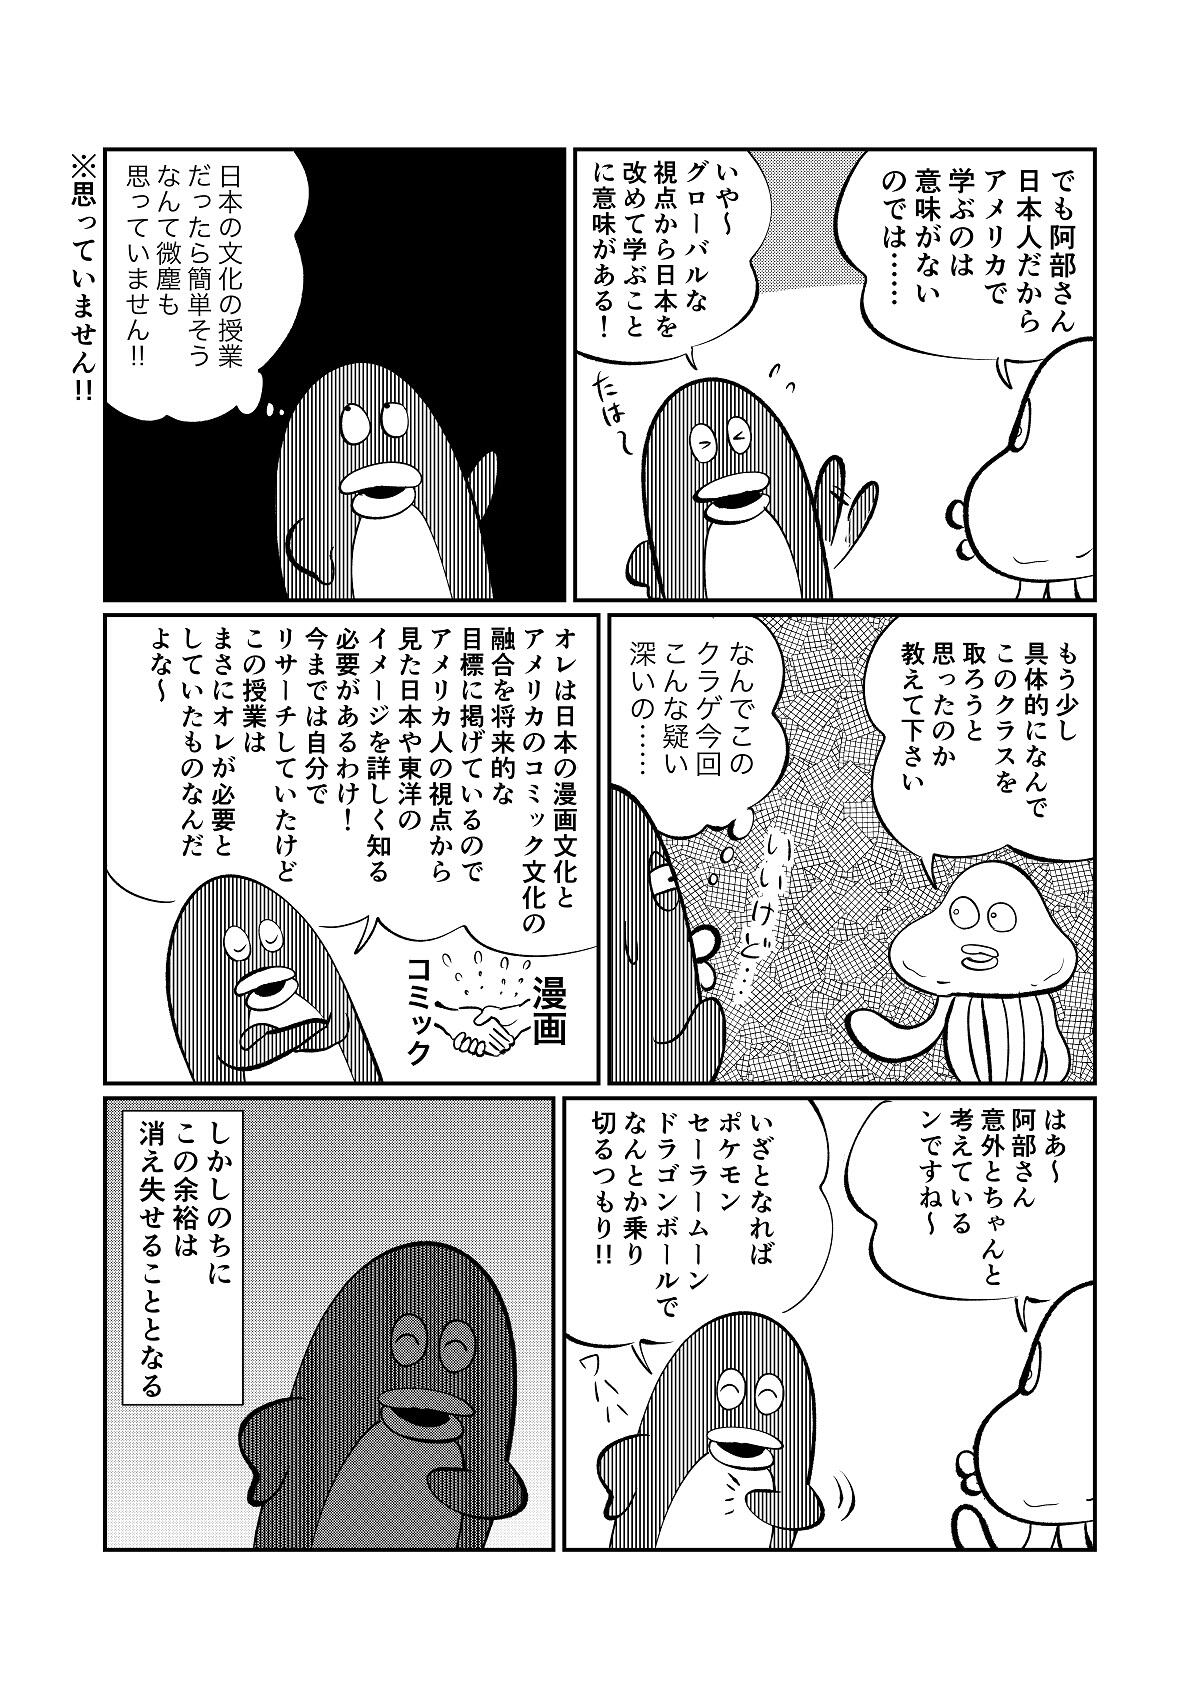 https://www.ryugaku.co.jp/column/images/jawamura19_3_1200.jpg